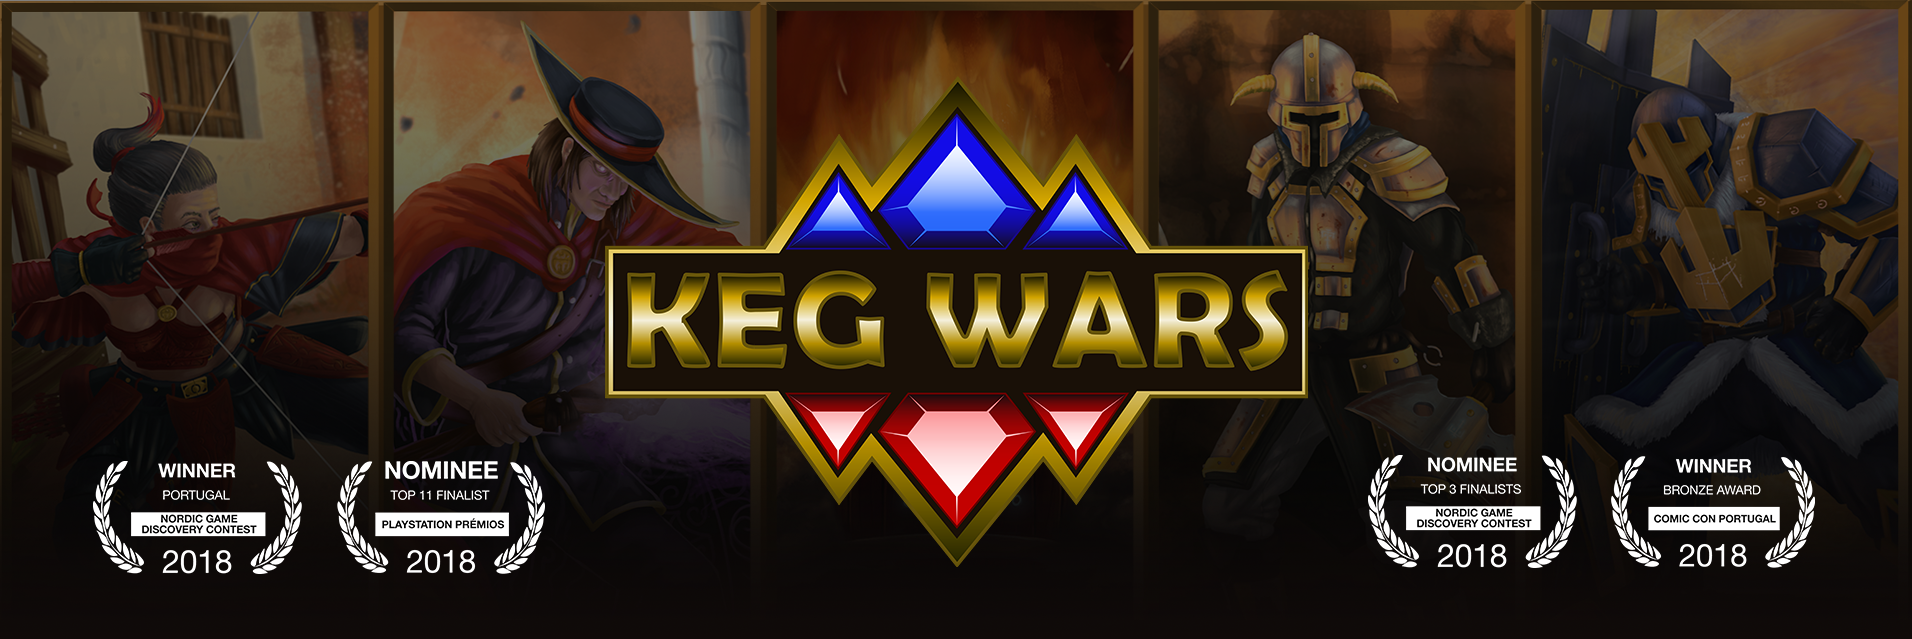 Keg Wars